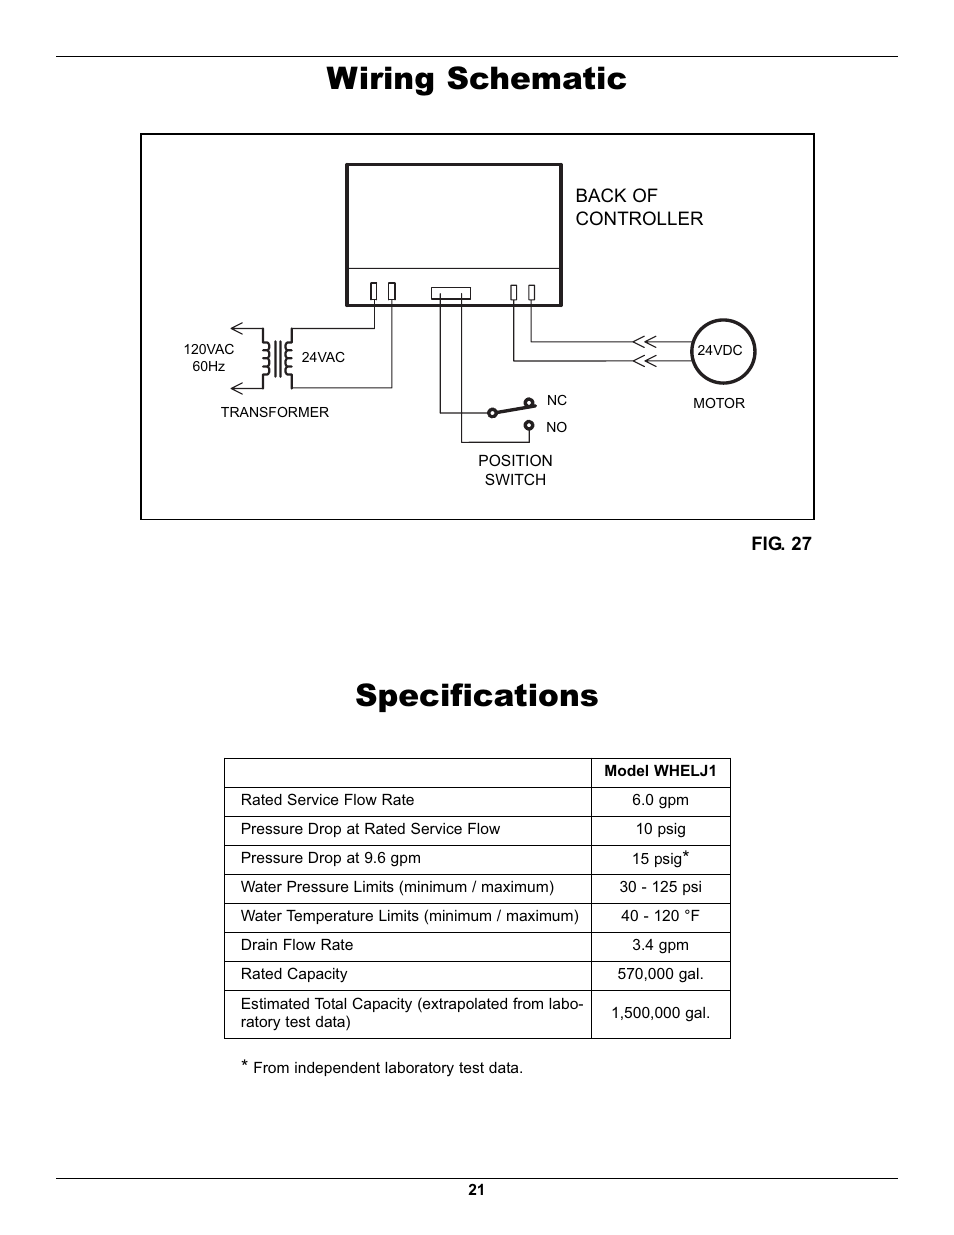 Wiring Schematic  Specifications